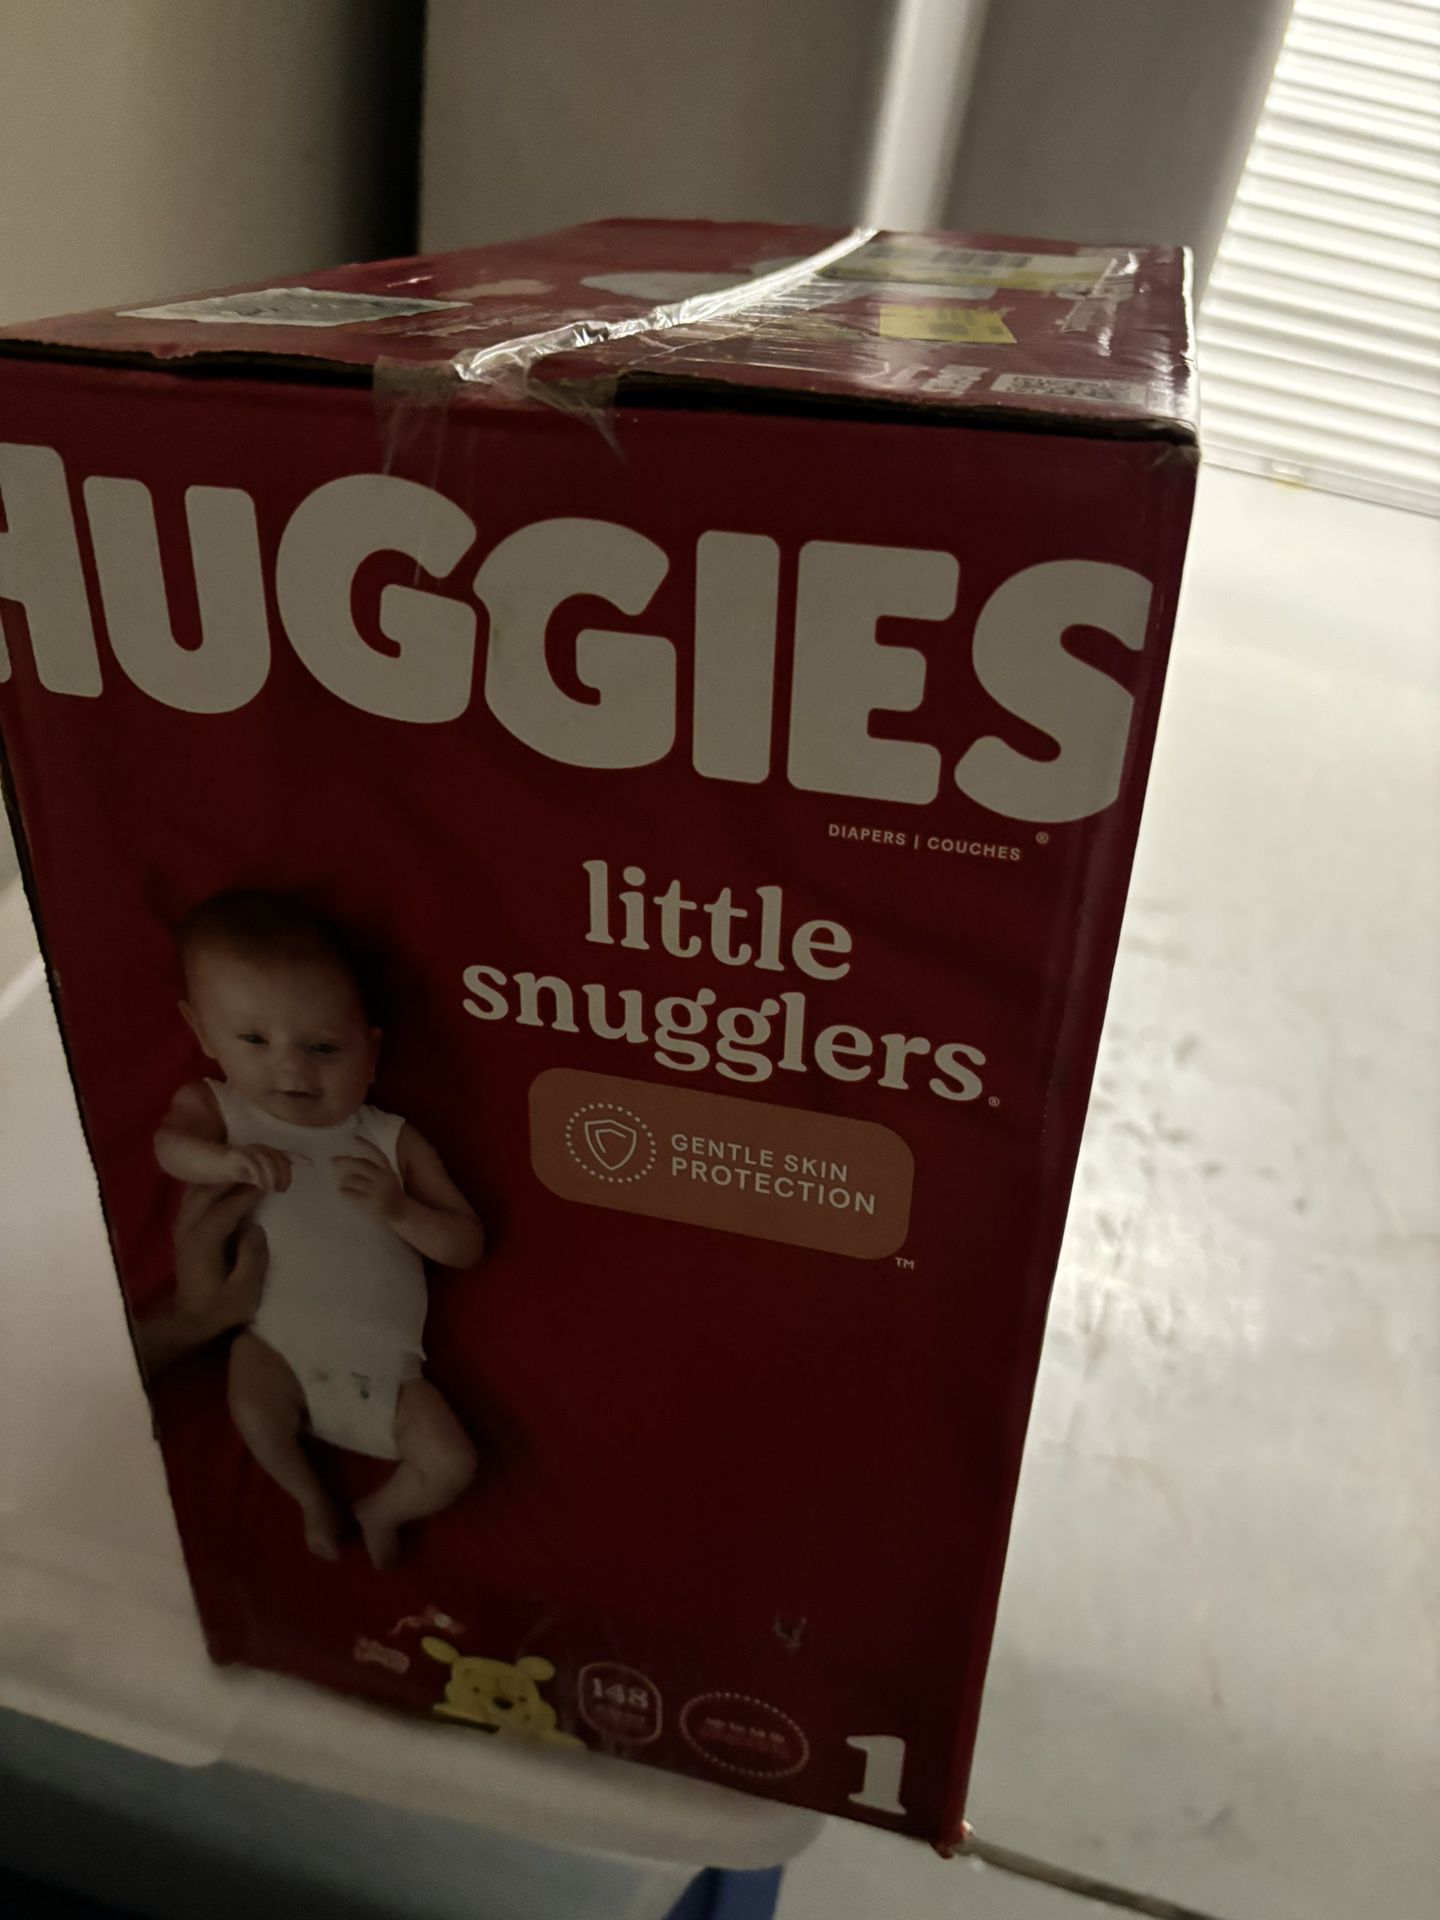 Huggies Diapers Size 1